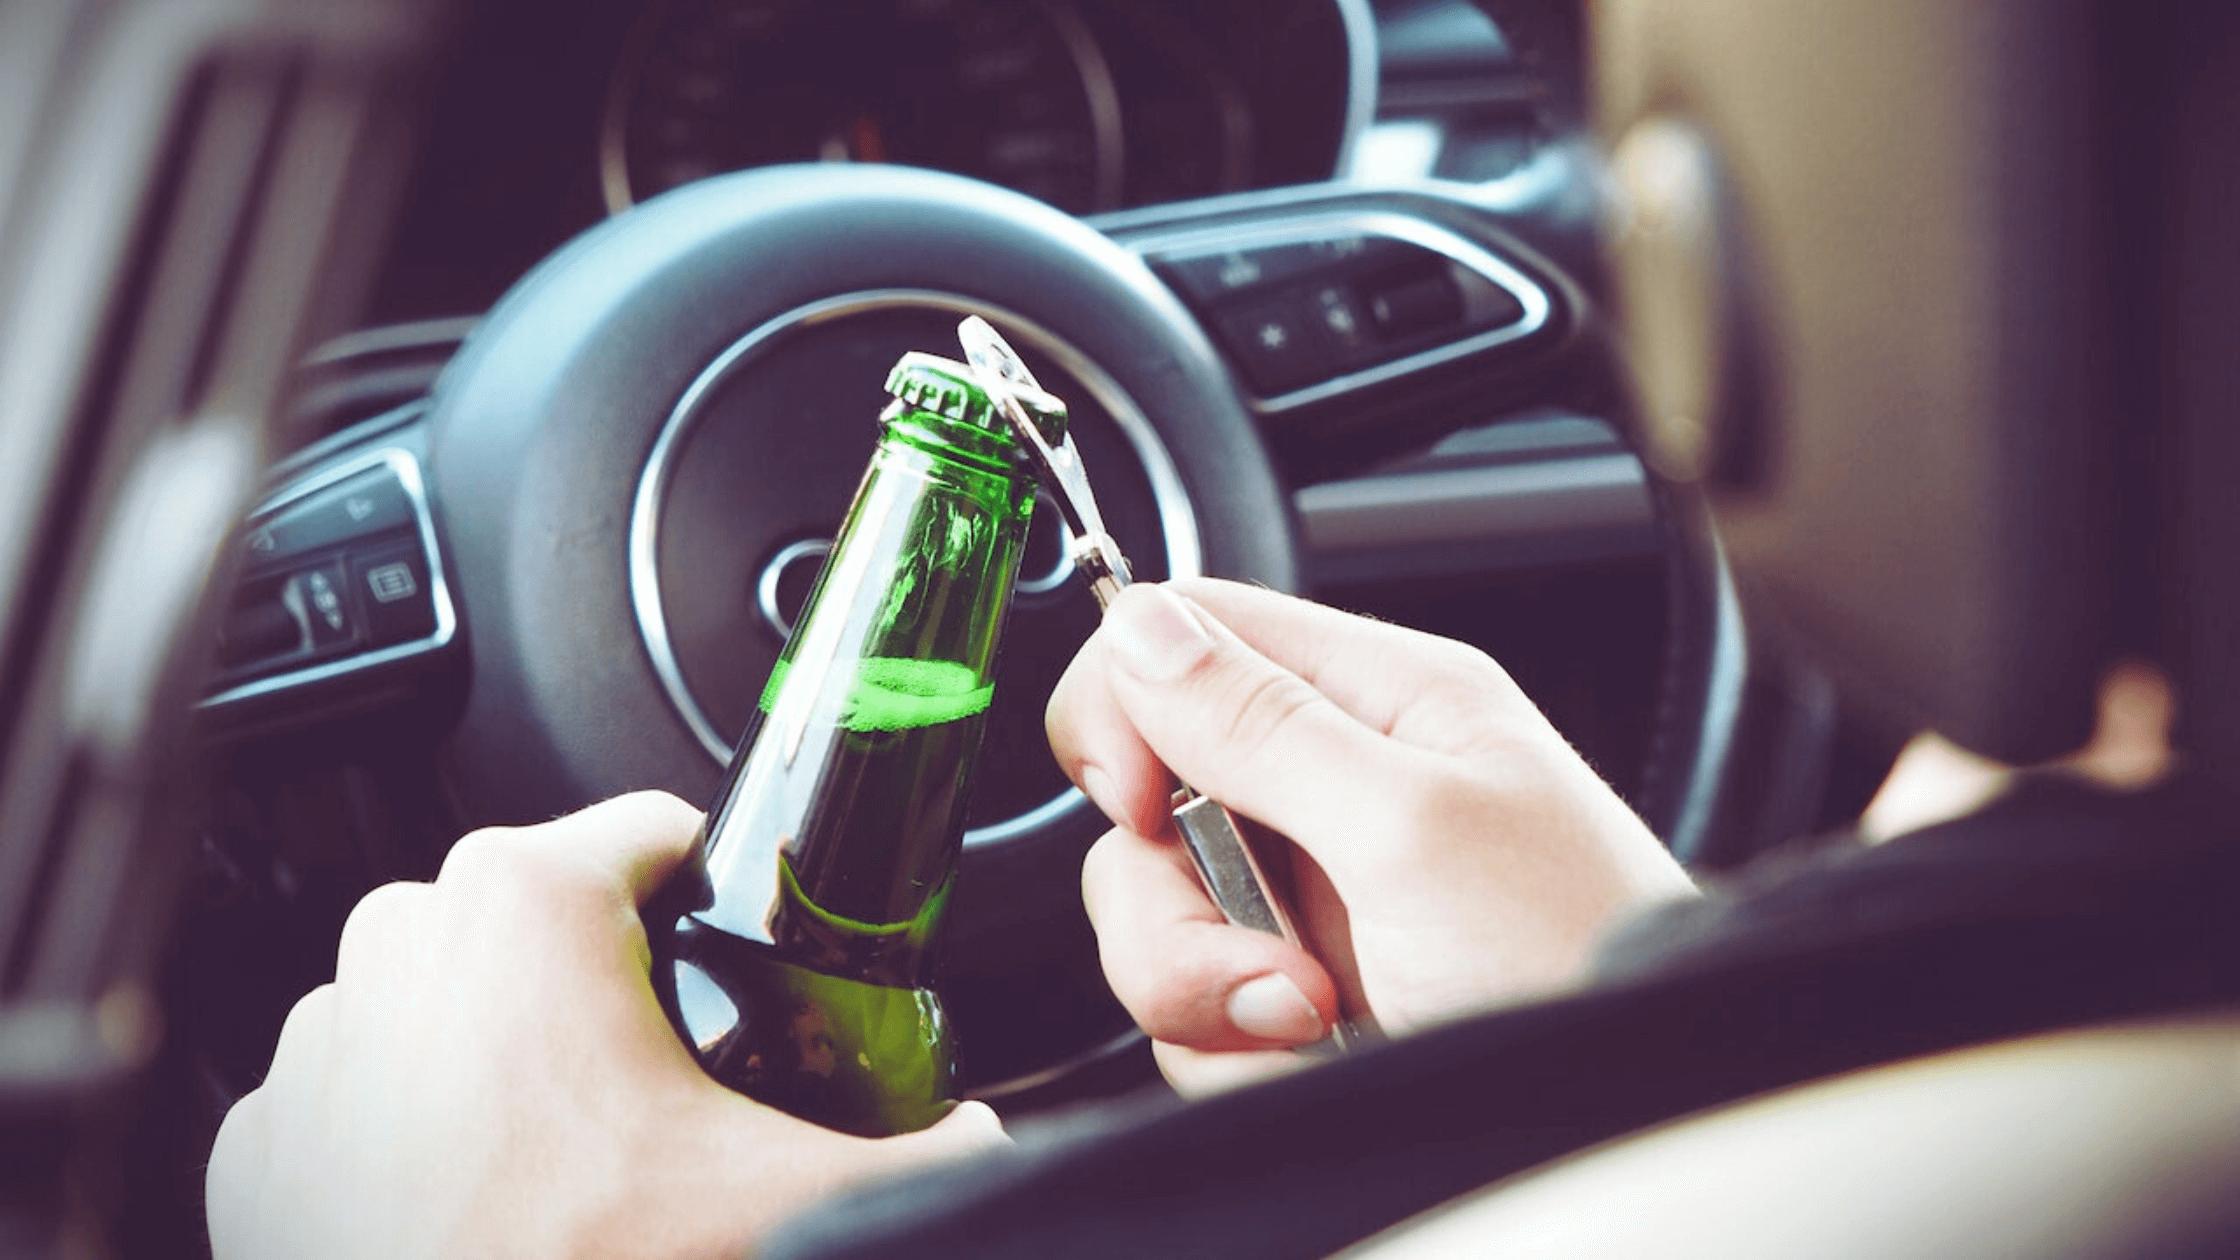 Underage driver opening beer bottle inside a moving car, highlighting DUI risks.